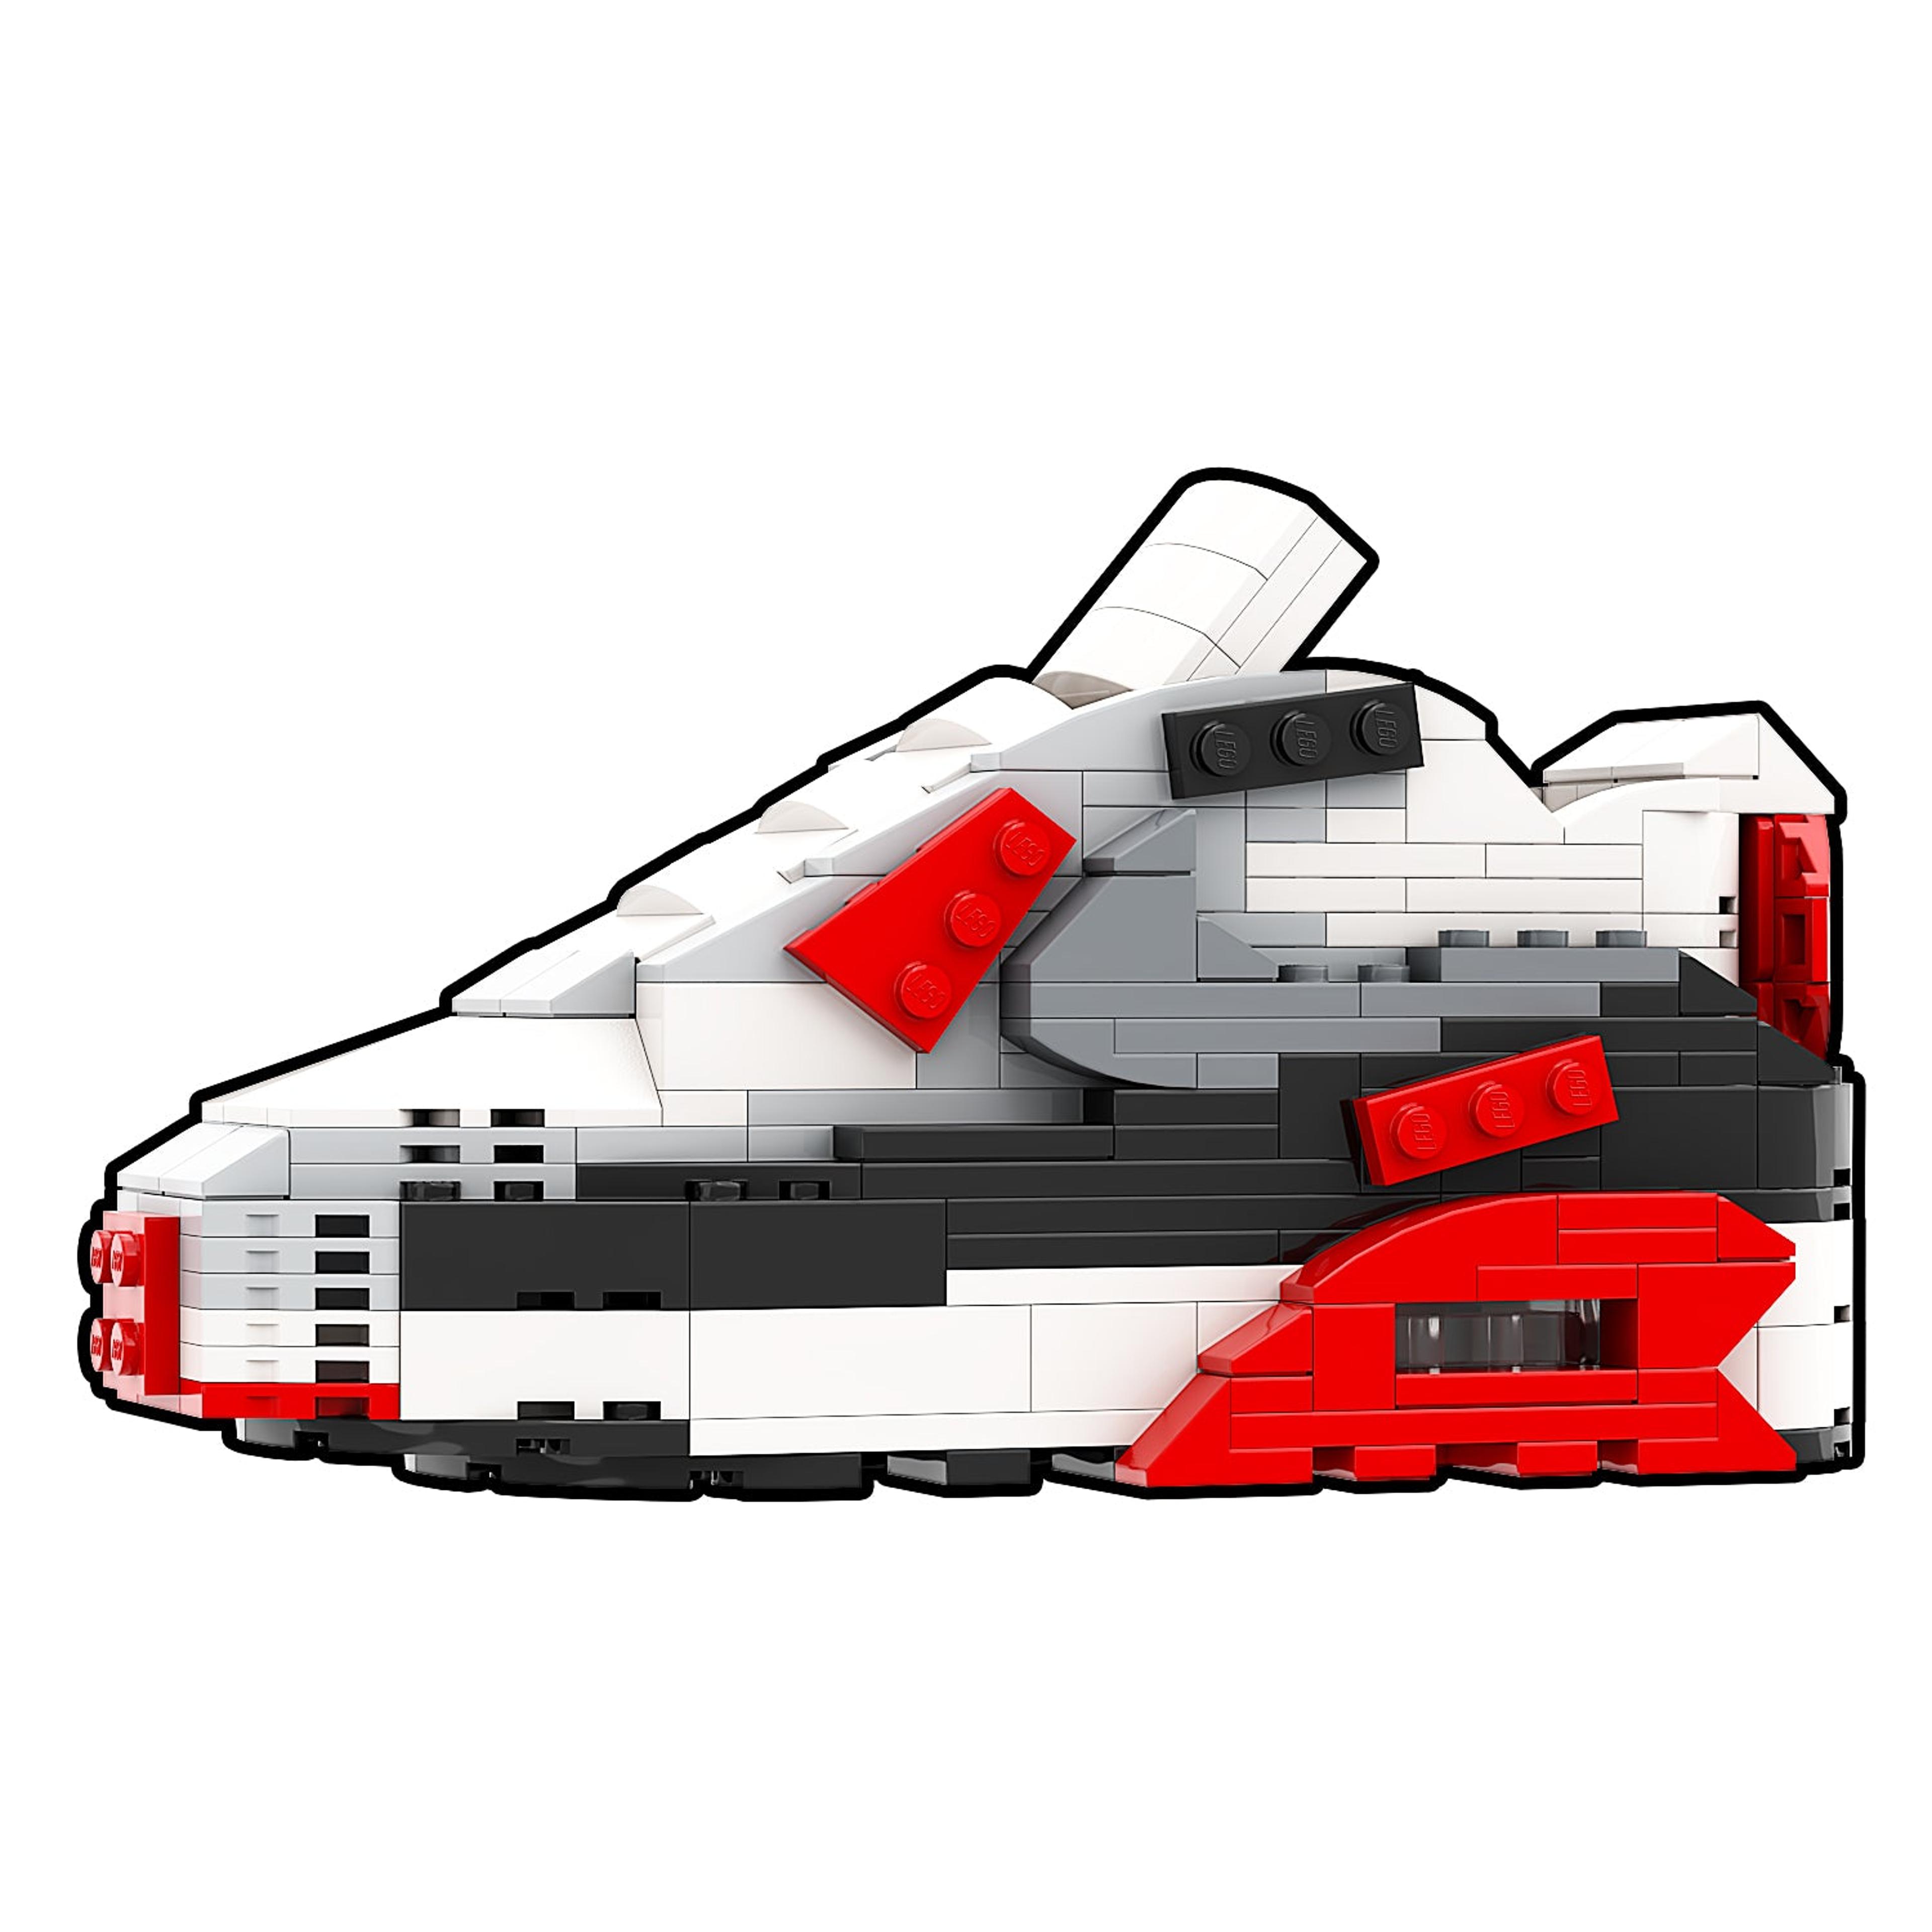 Alternate View 2 of REGULAR "Air Max 90 Infrared" Sneaker Bricks with Mini Figure